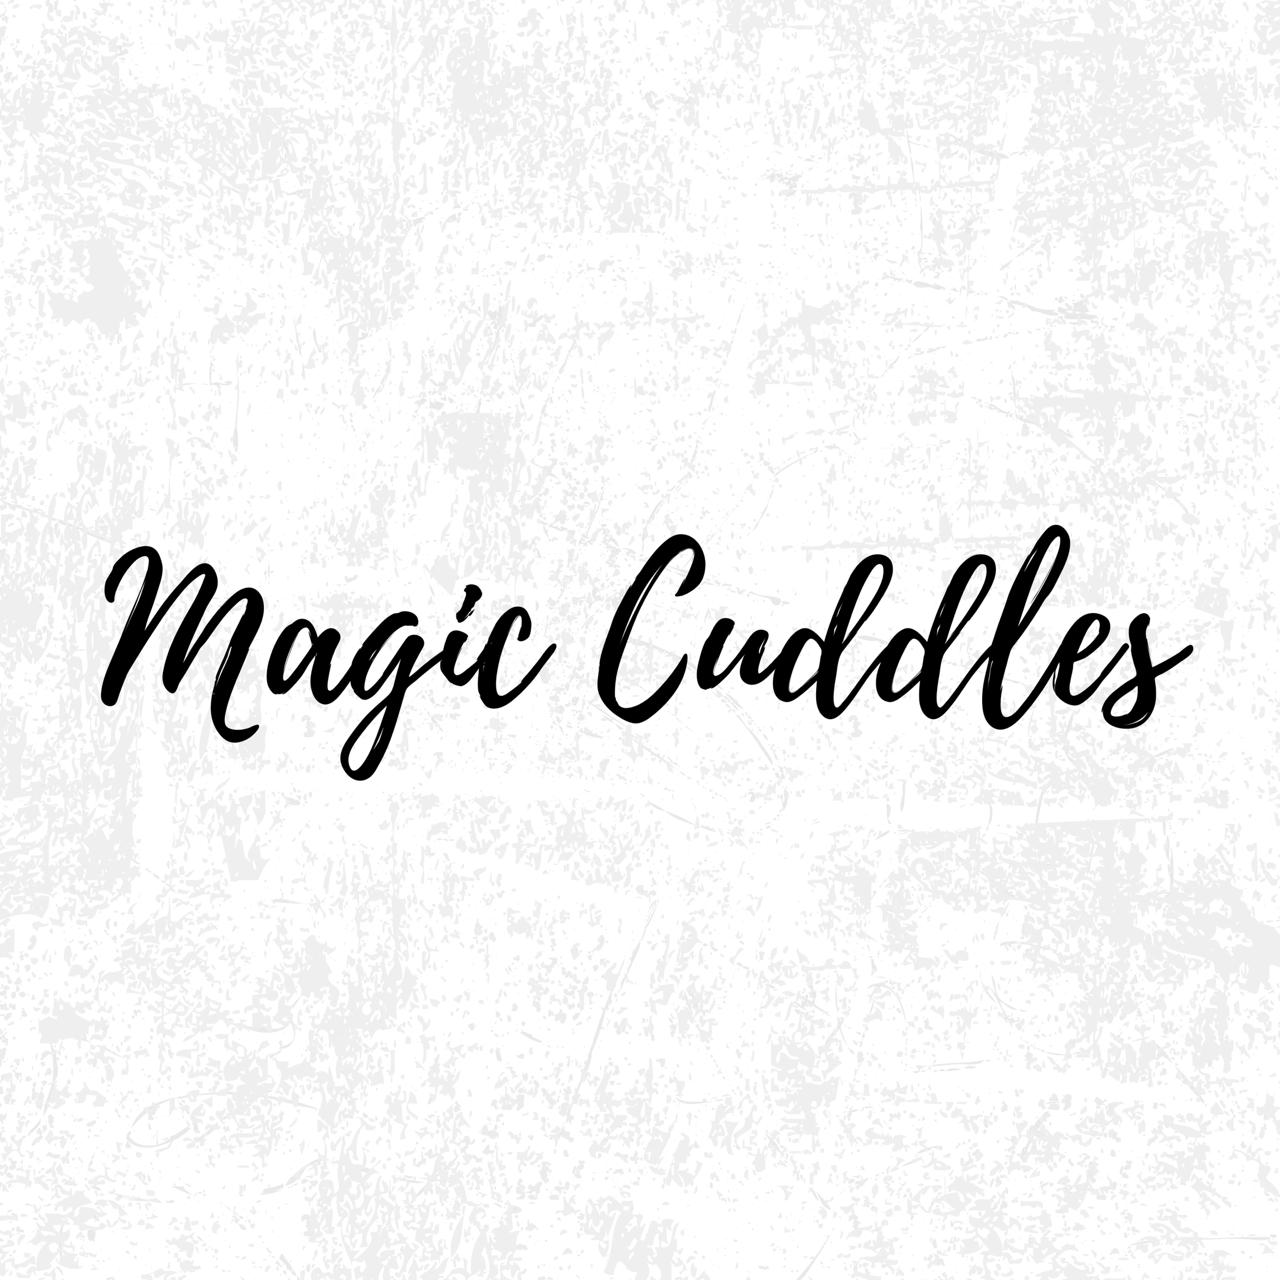 Magic cuddles